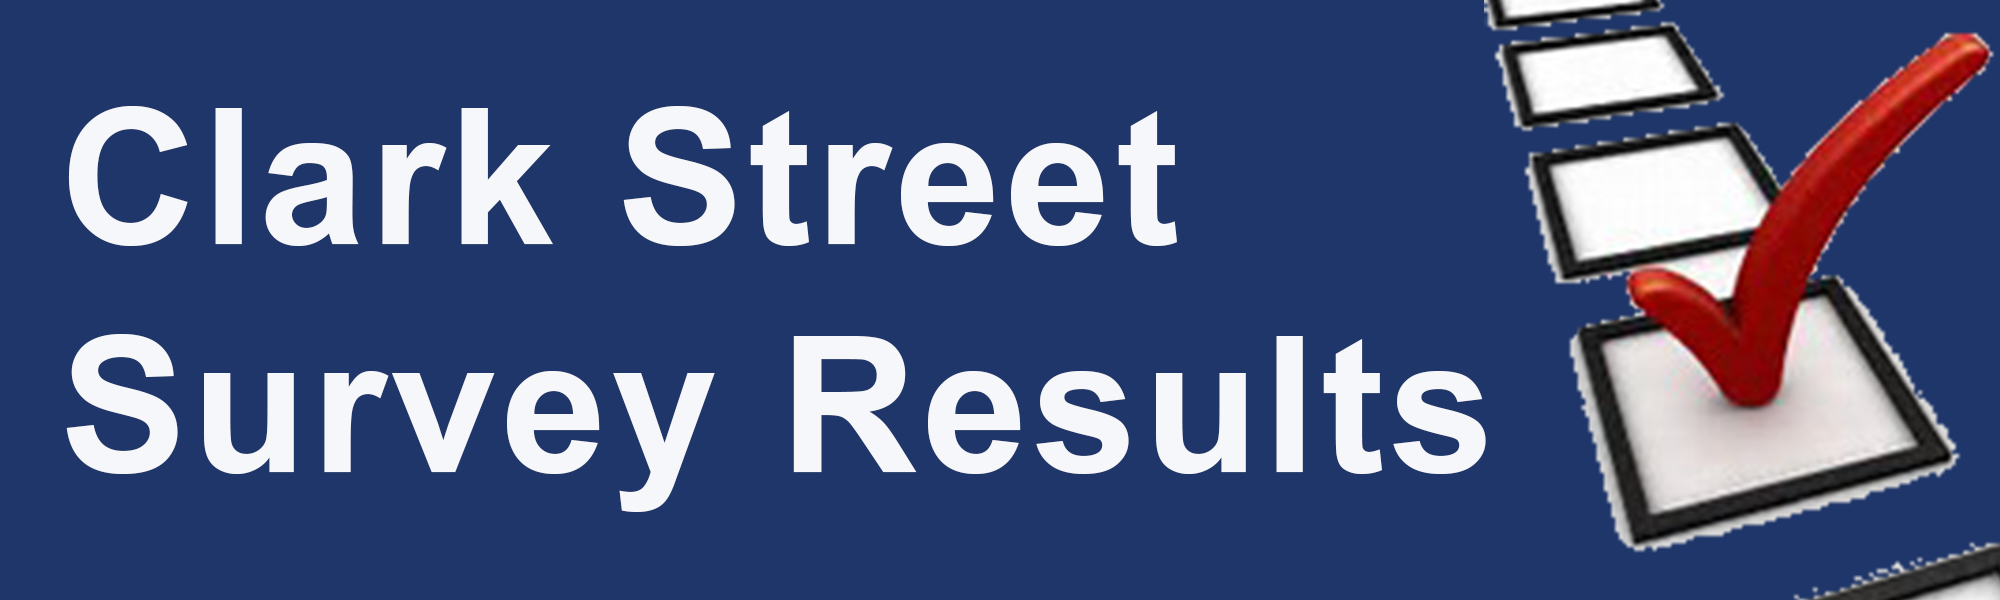 Clark Street Survey Results